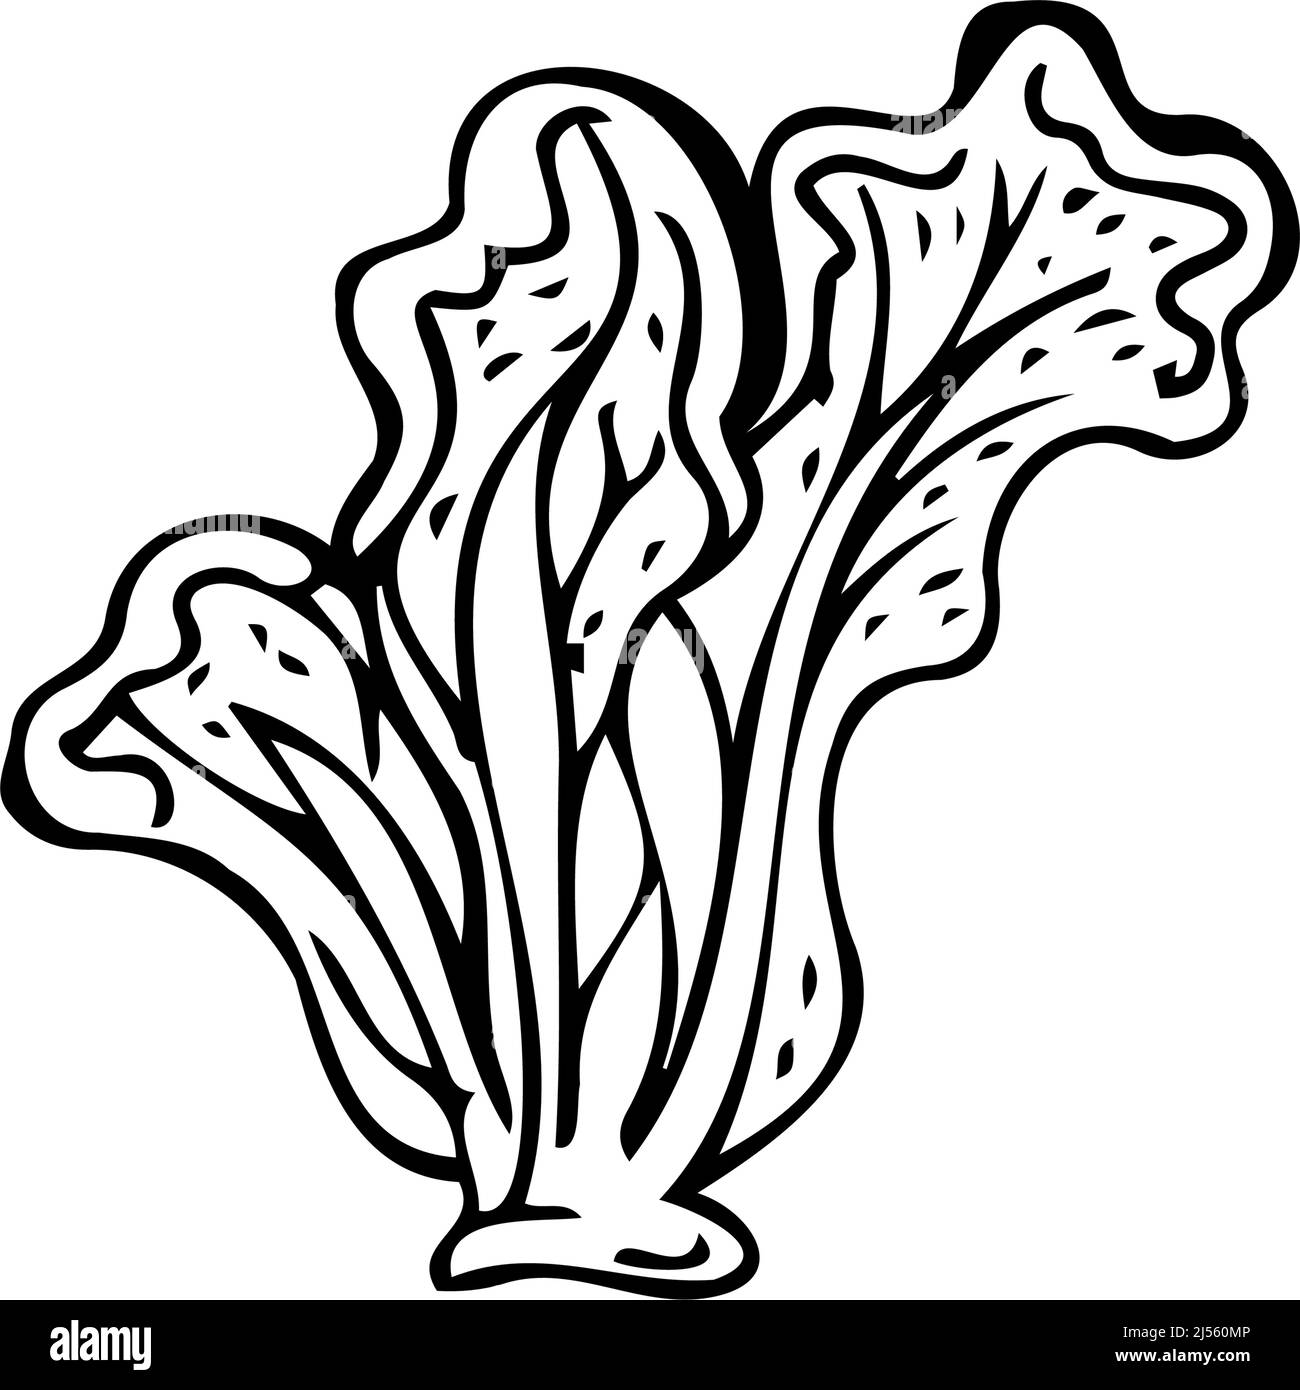 Lettuce leaves thin black lines on a white background - Vector illustration Stock Vector